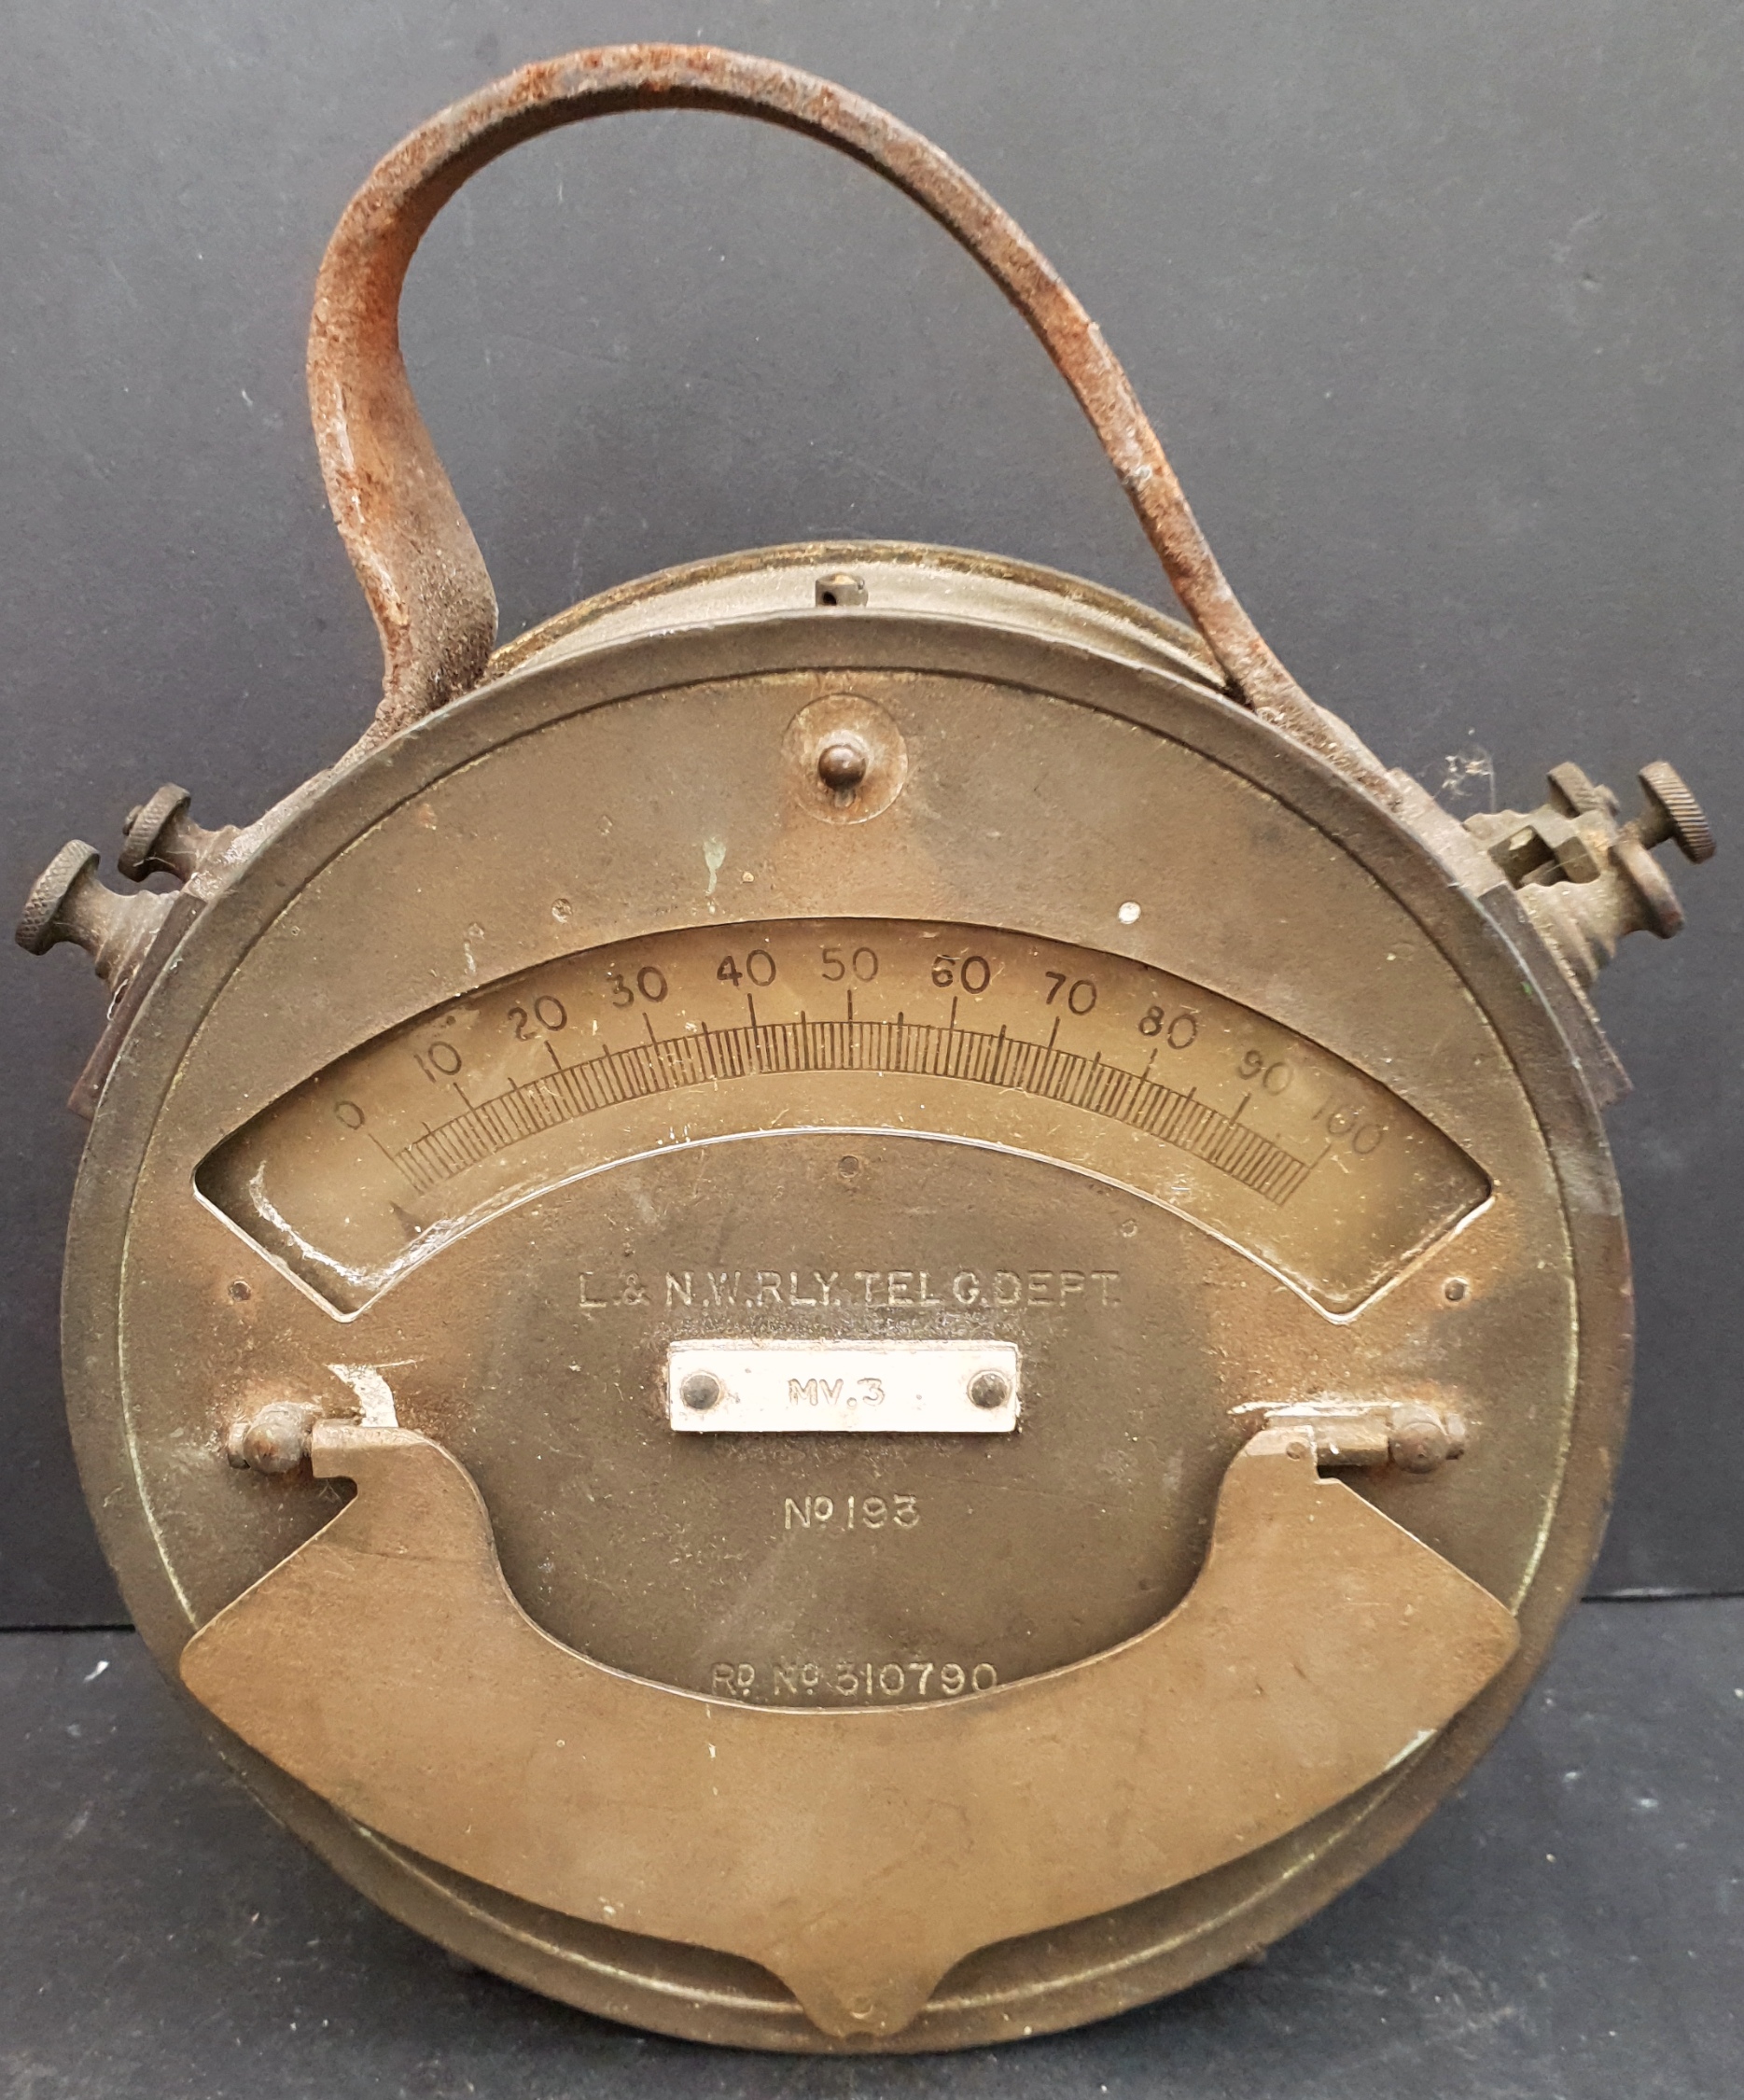 Vintage Brass London & North West Railway Tel G Dept Meter